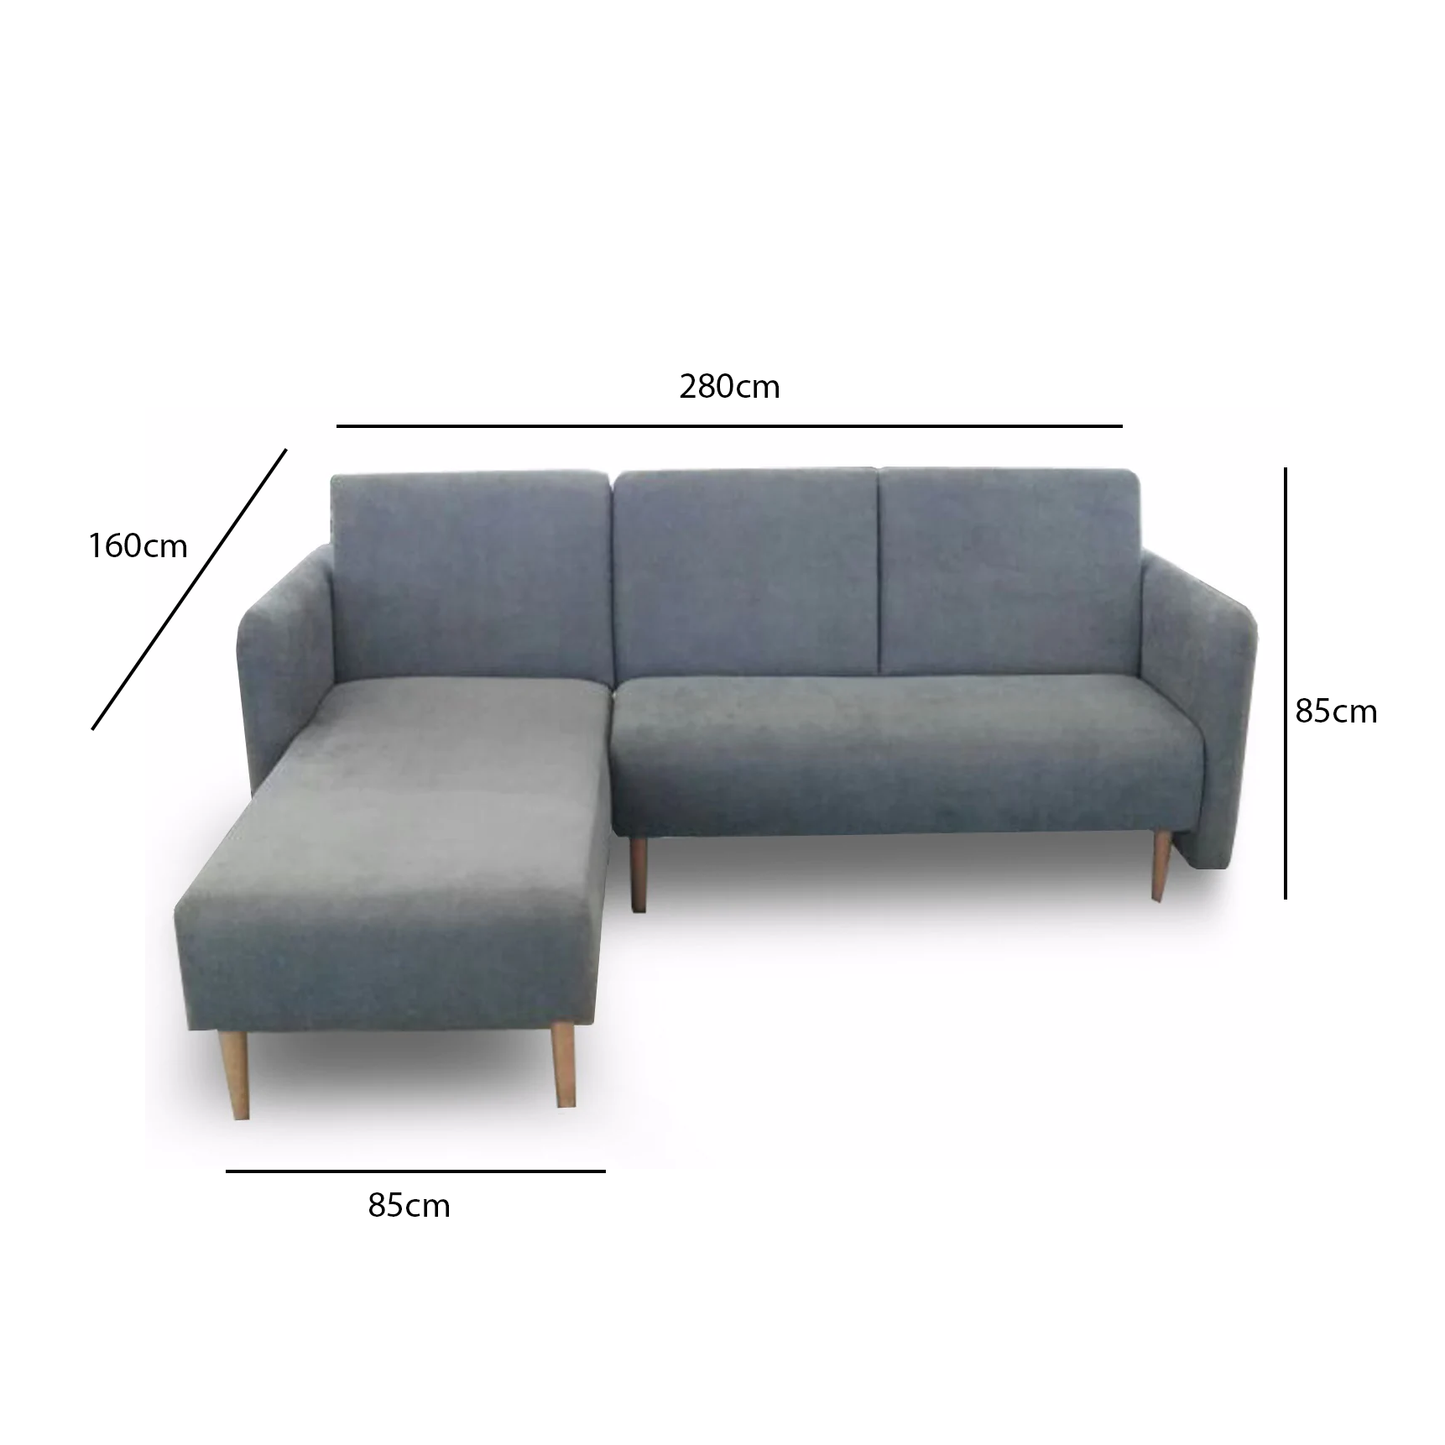 Beech sofa Corner Bed - Multiple Colors- KM145